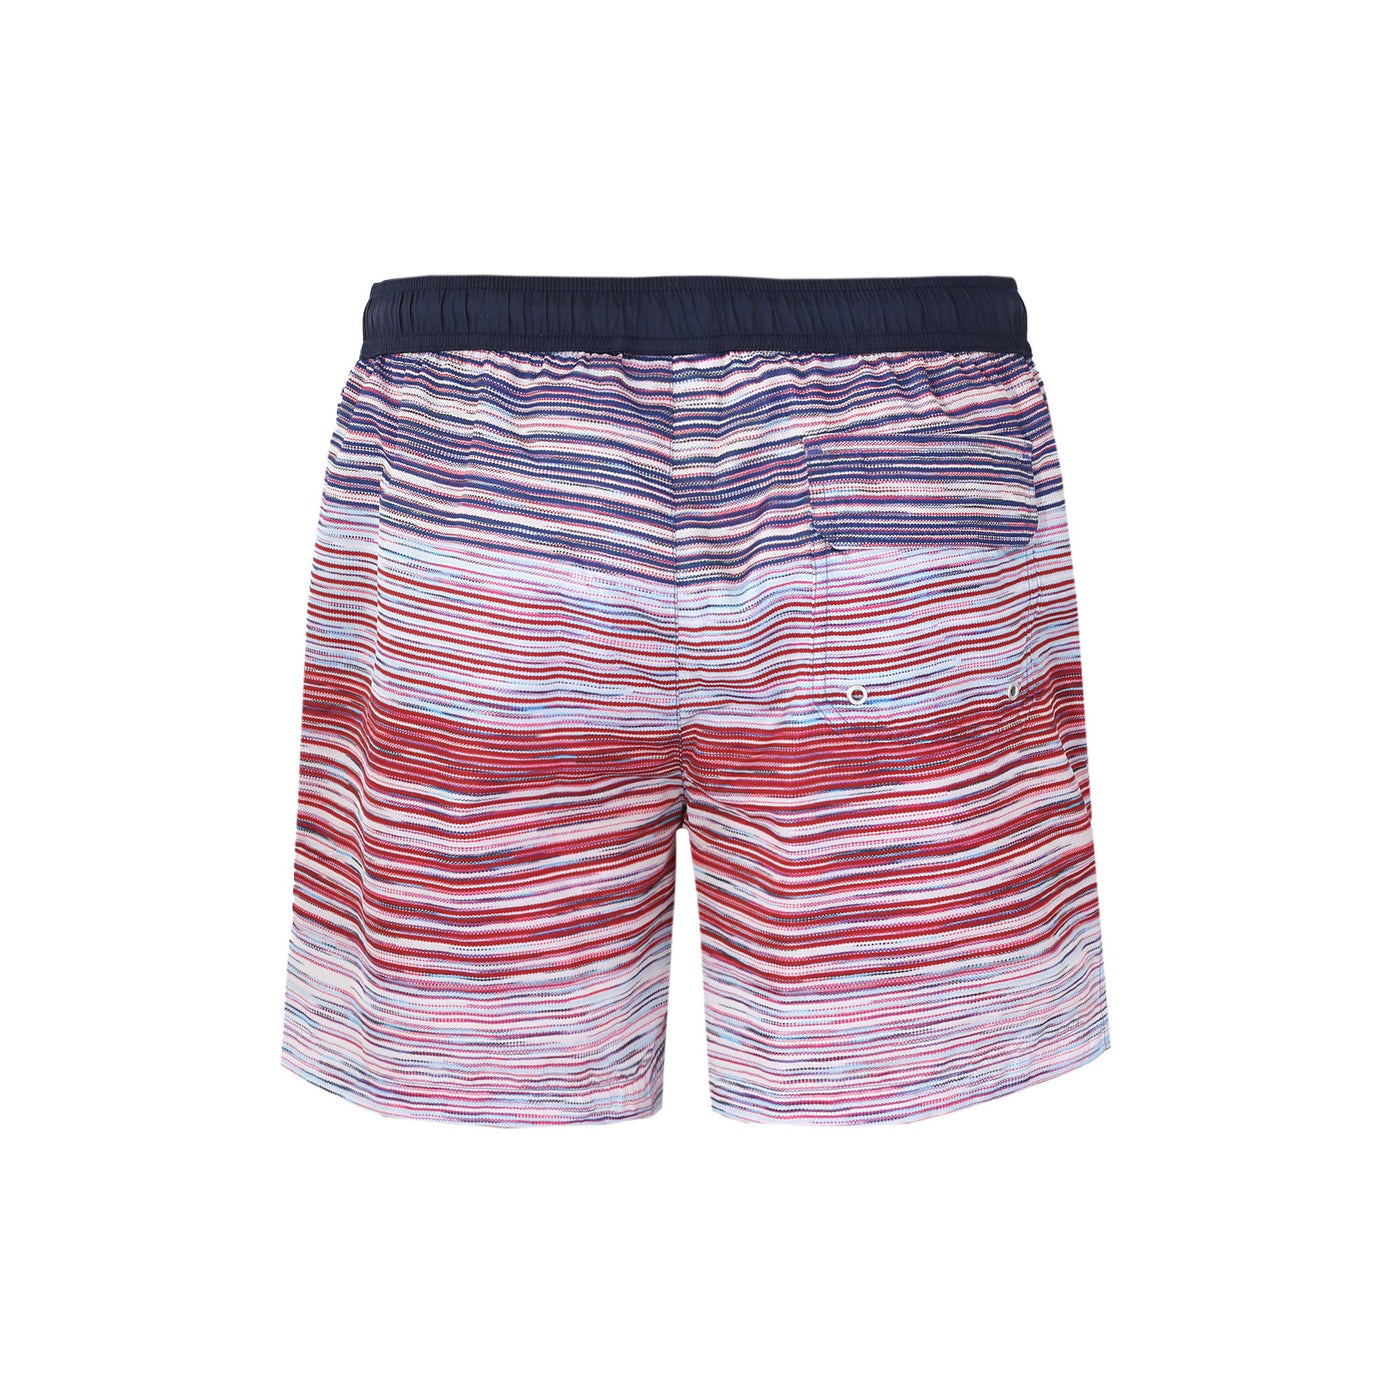 Missoni Stripe Swim Short in Red Blue Multi Back